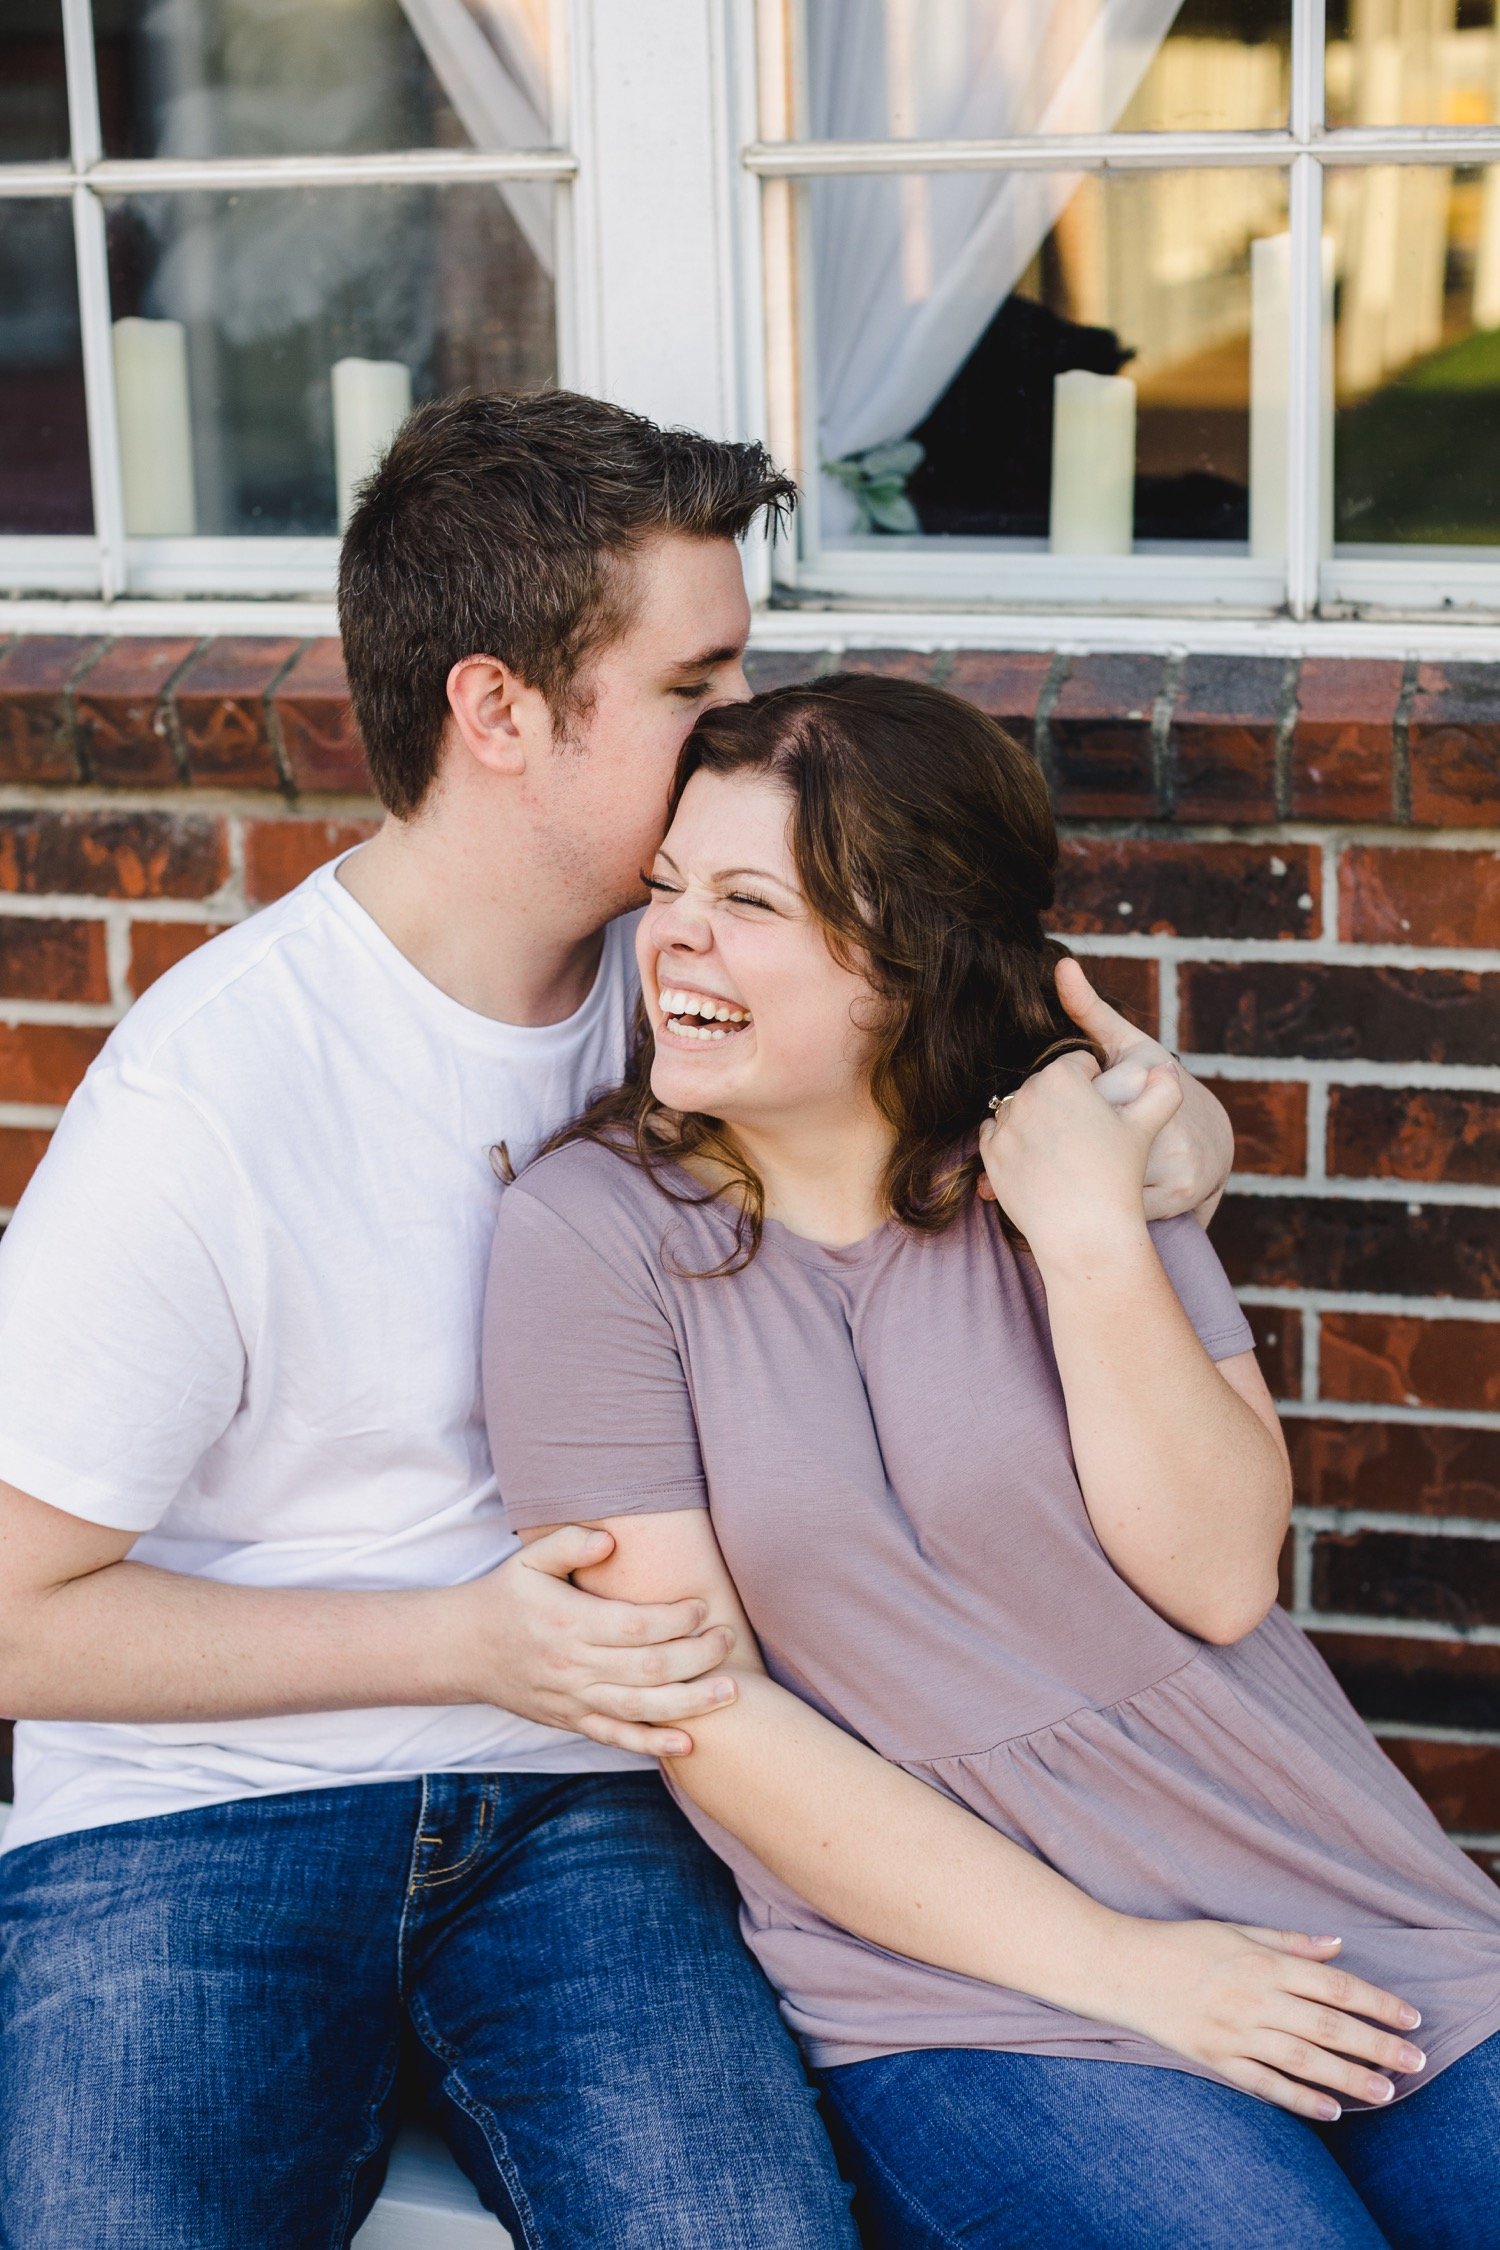 025_Miranda&Michael-28_Kelsey-Diane-Photography-Best-of-2021-Kansas-City-Missouri-Photographer-Wedding-Family-Engagement-Newborn-Maternity.jpg